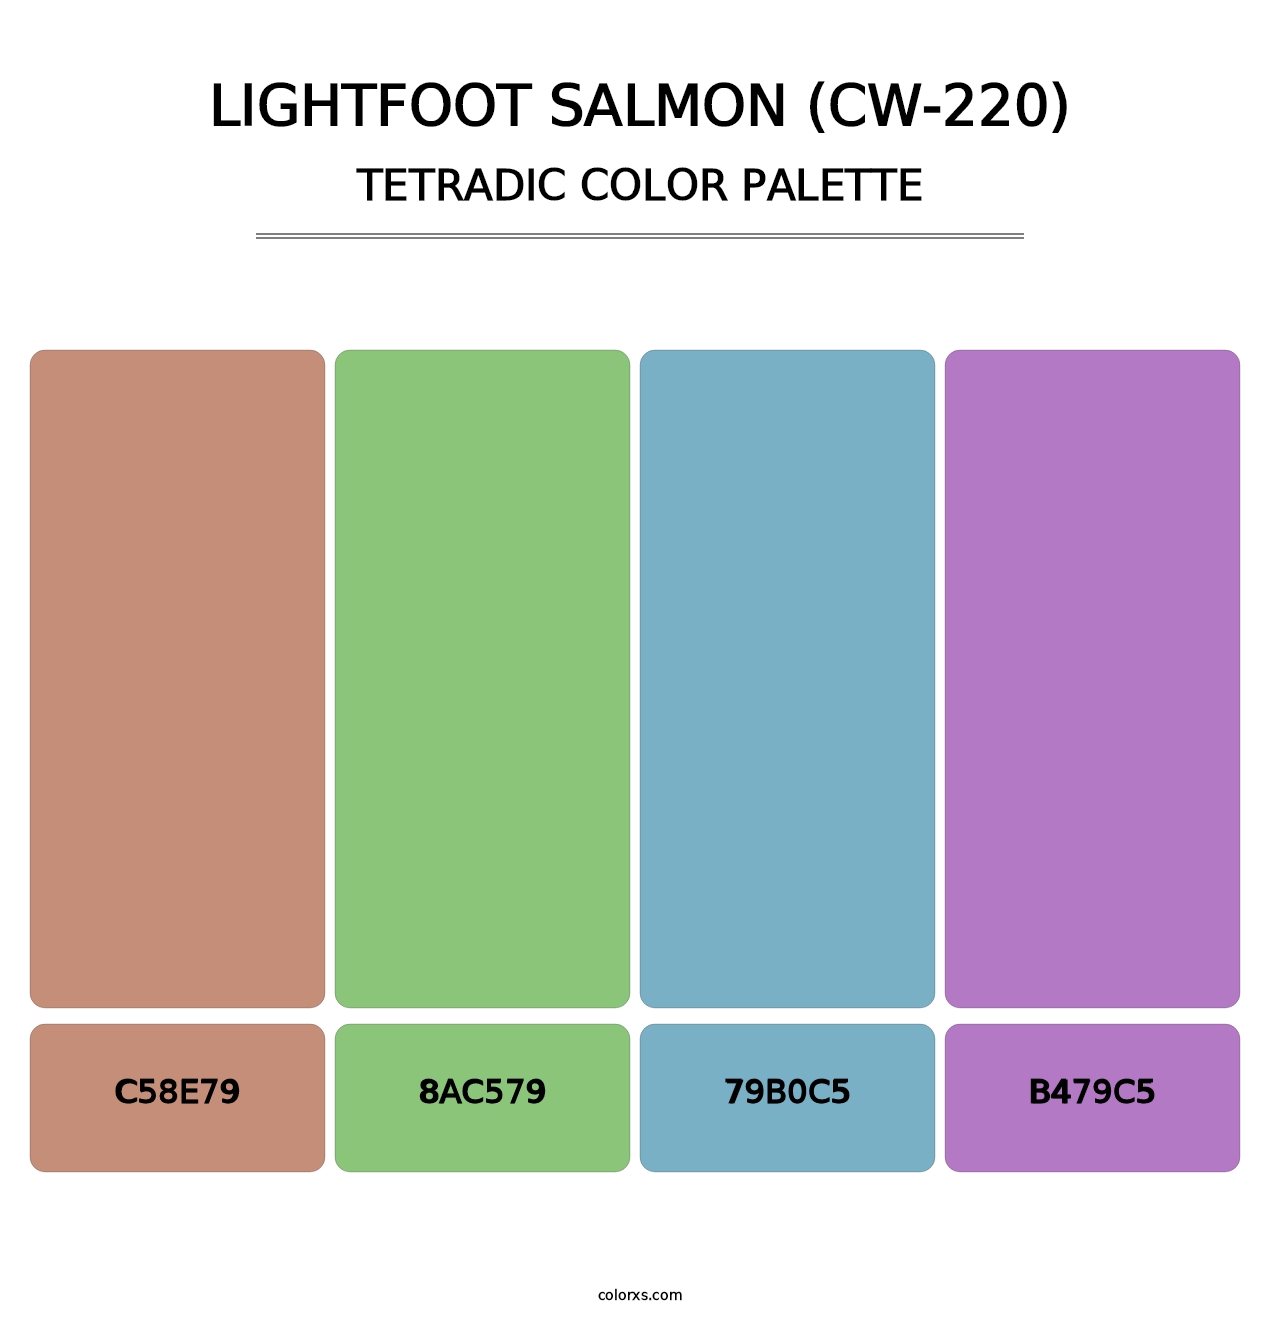 Lightfoot Salmon (CW-220) - Tetradic Color Palette